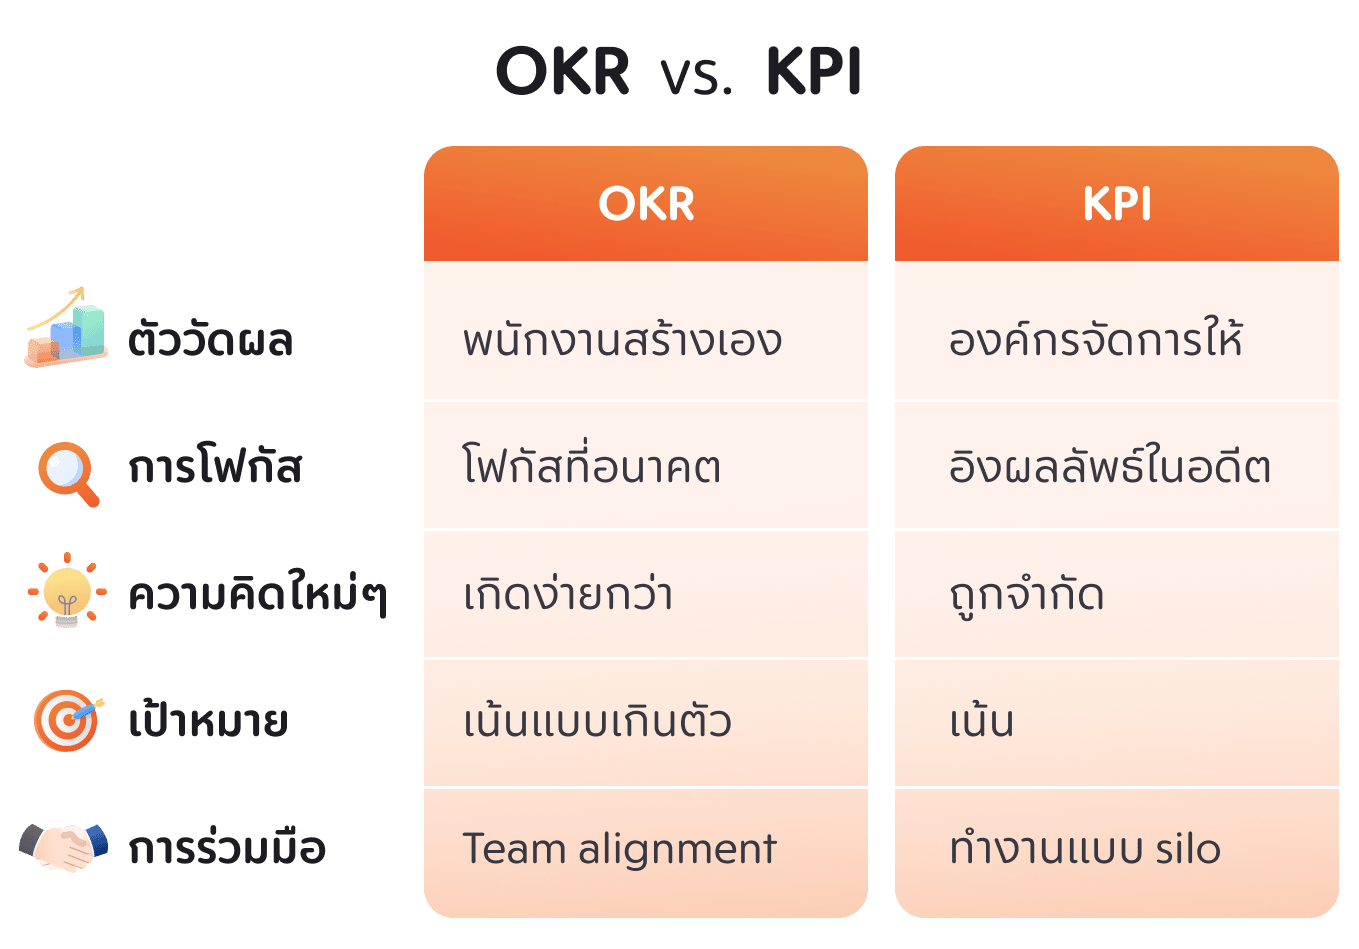 OKR KPI difference